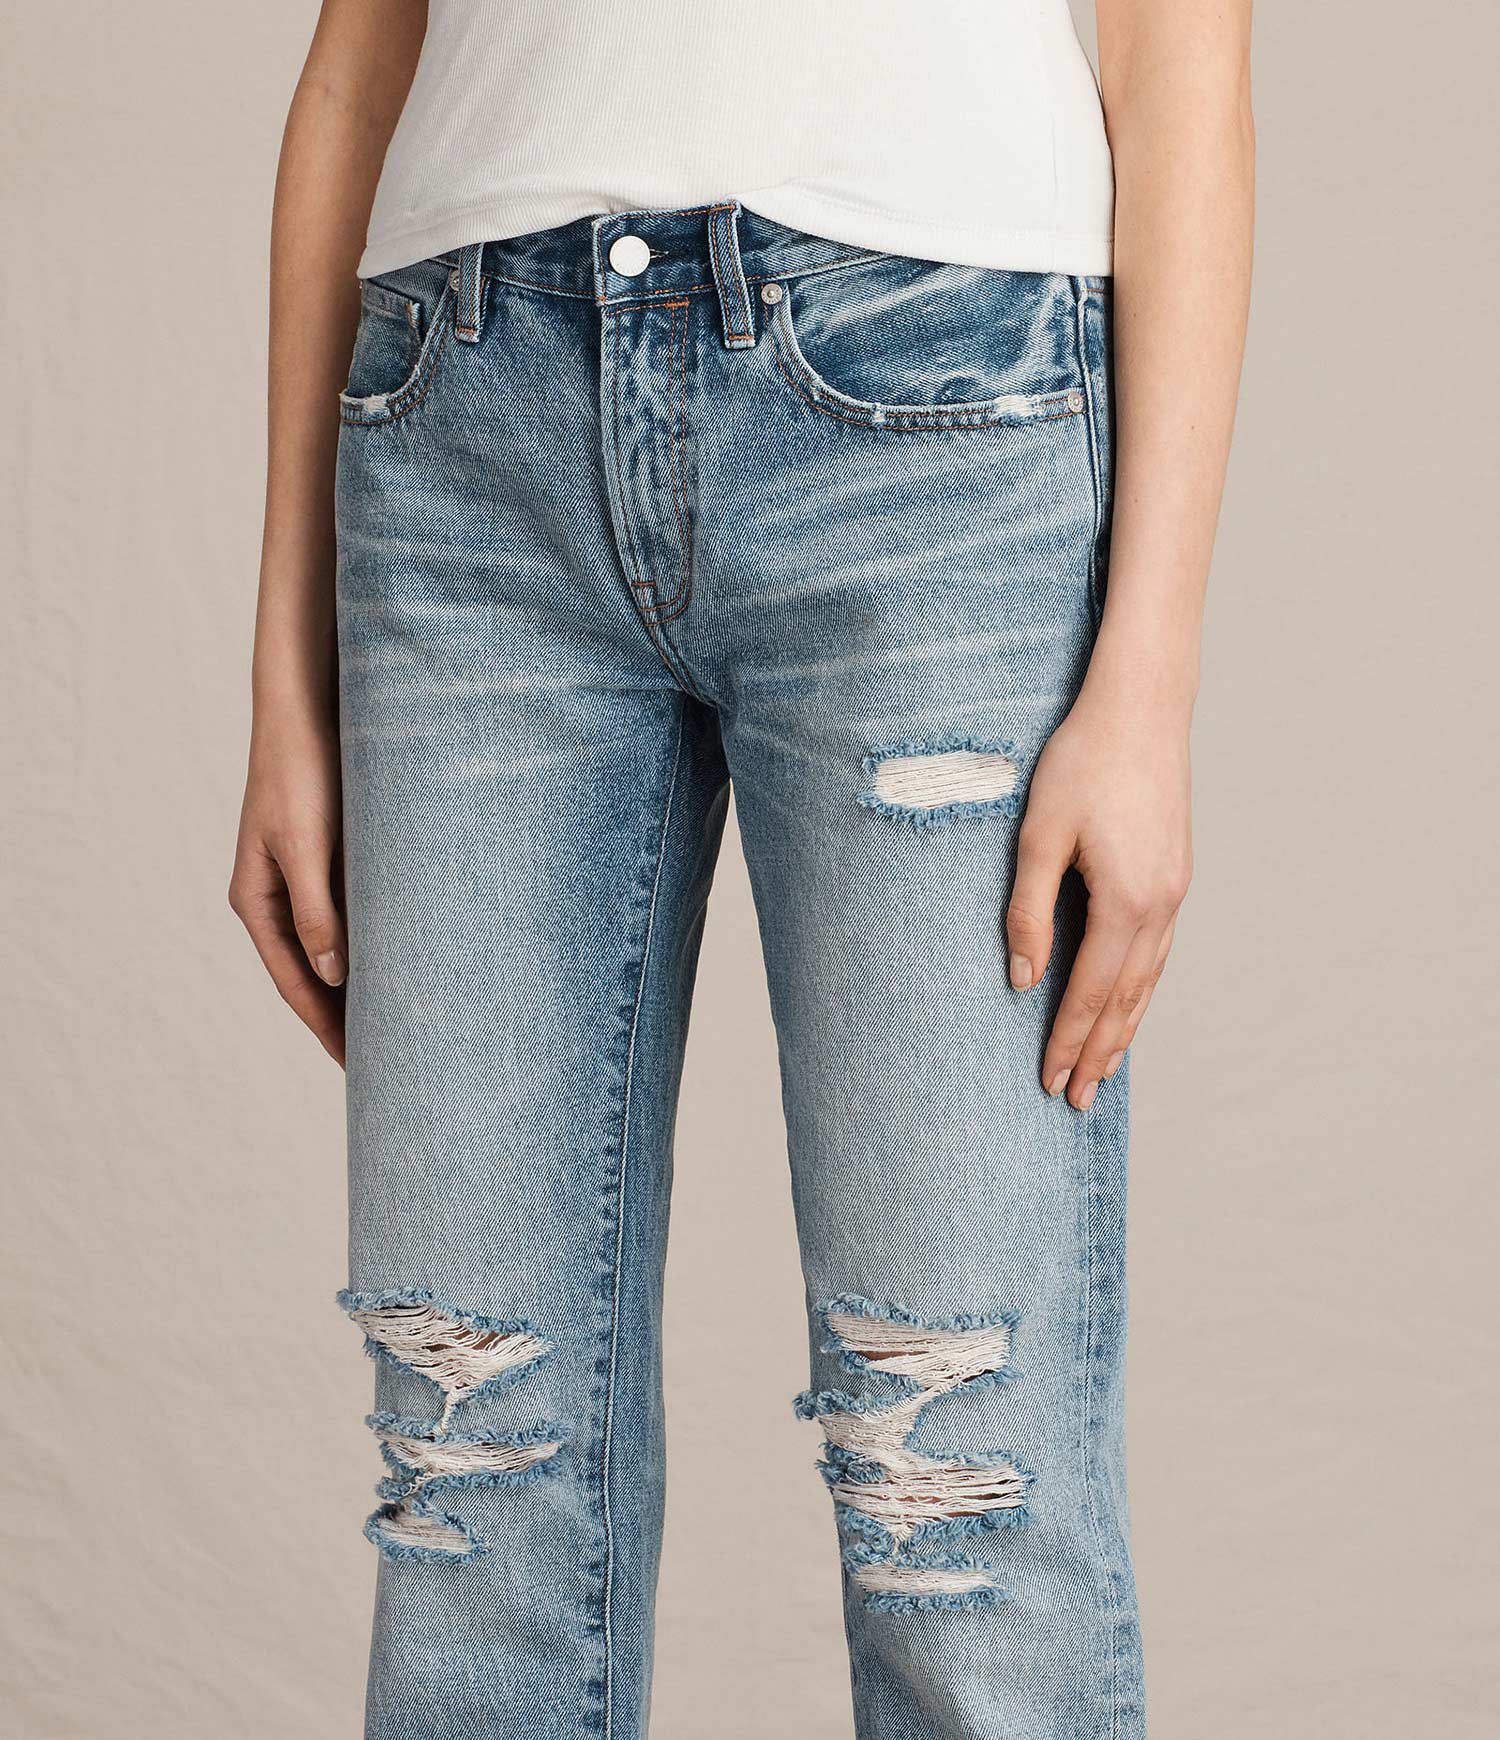 Find Of The Week: ALLSAINTS Muse Slim Destroy Jeans - THE JEANS BLOG